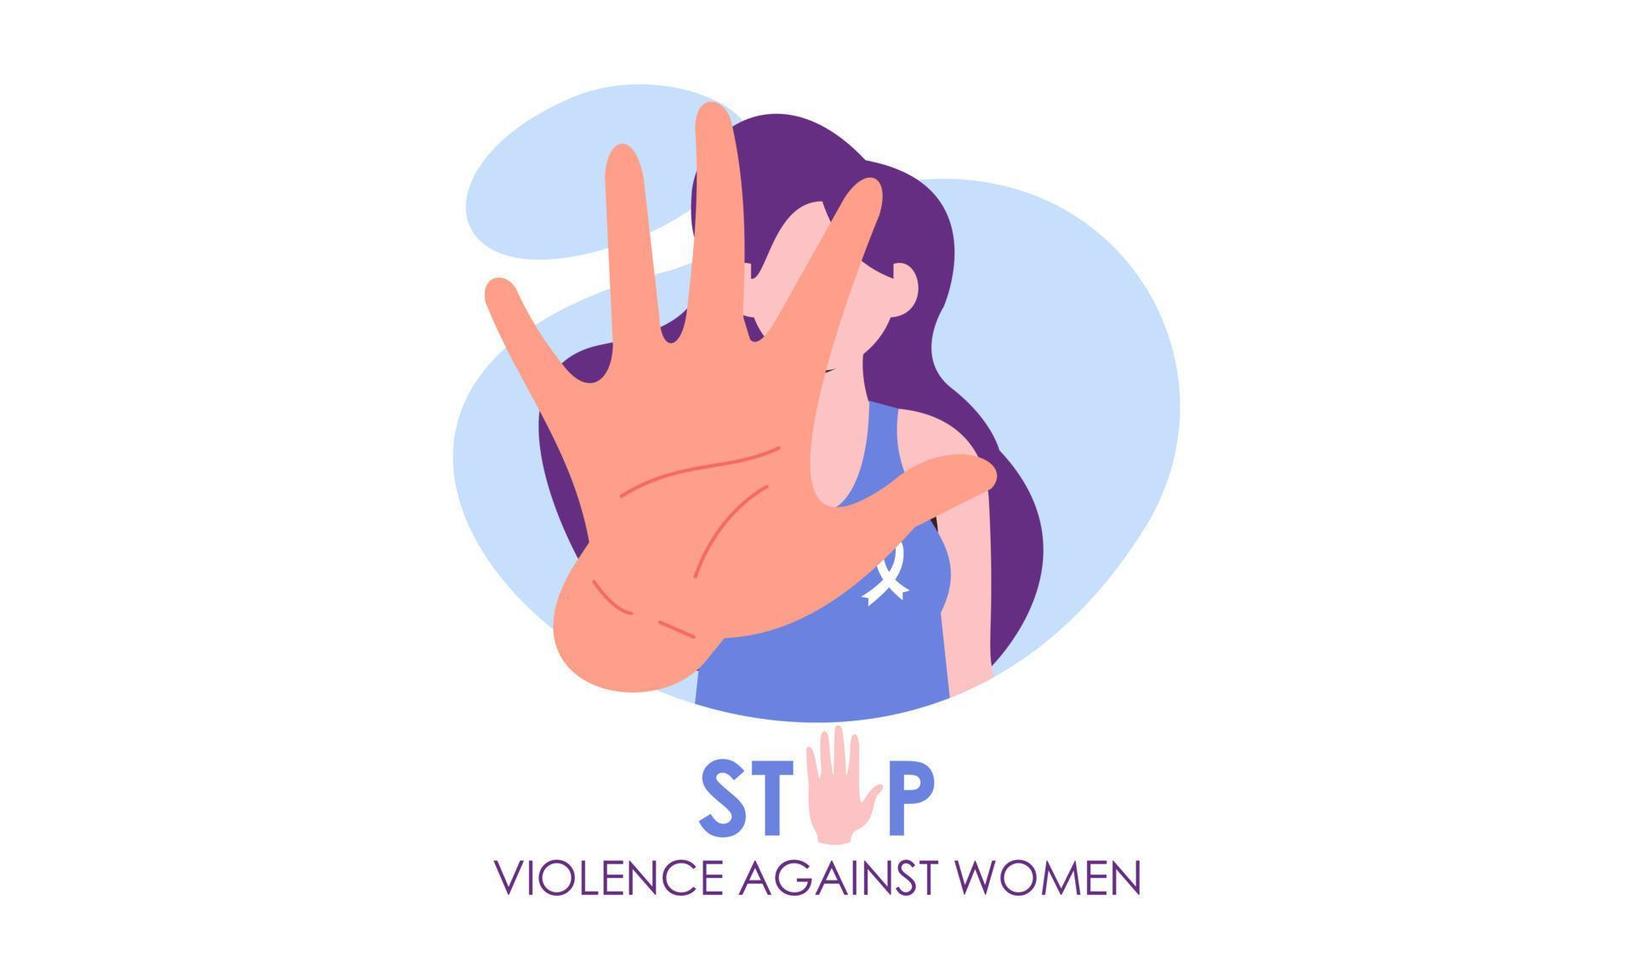 International day for the elimination of violence against women illustration vector